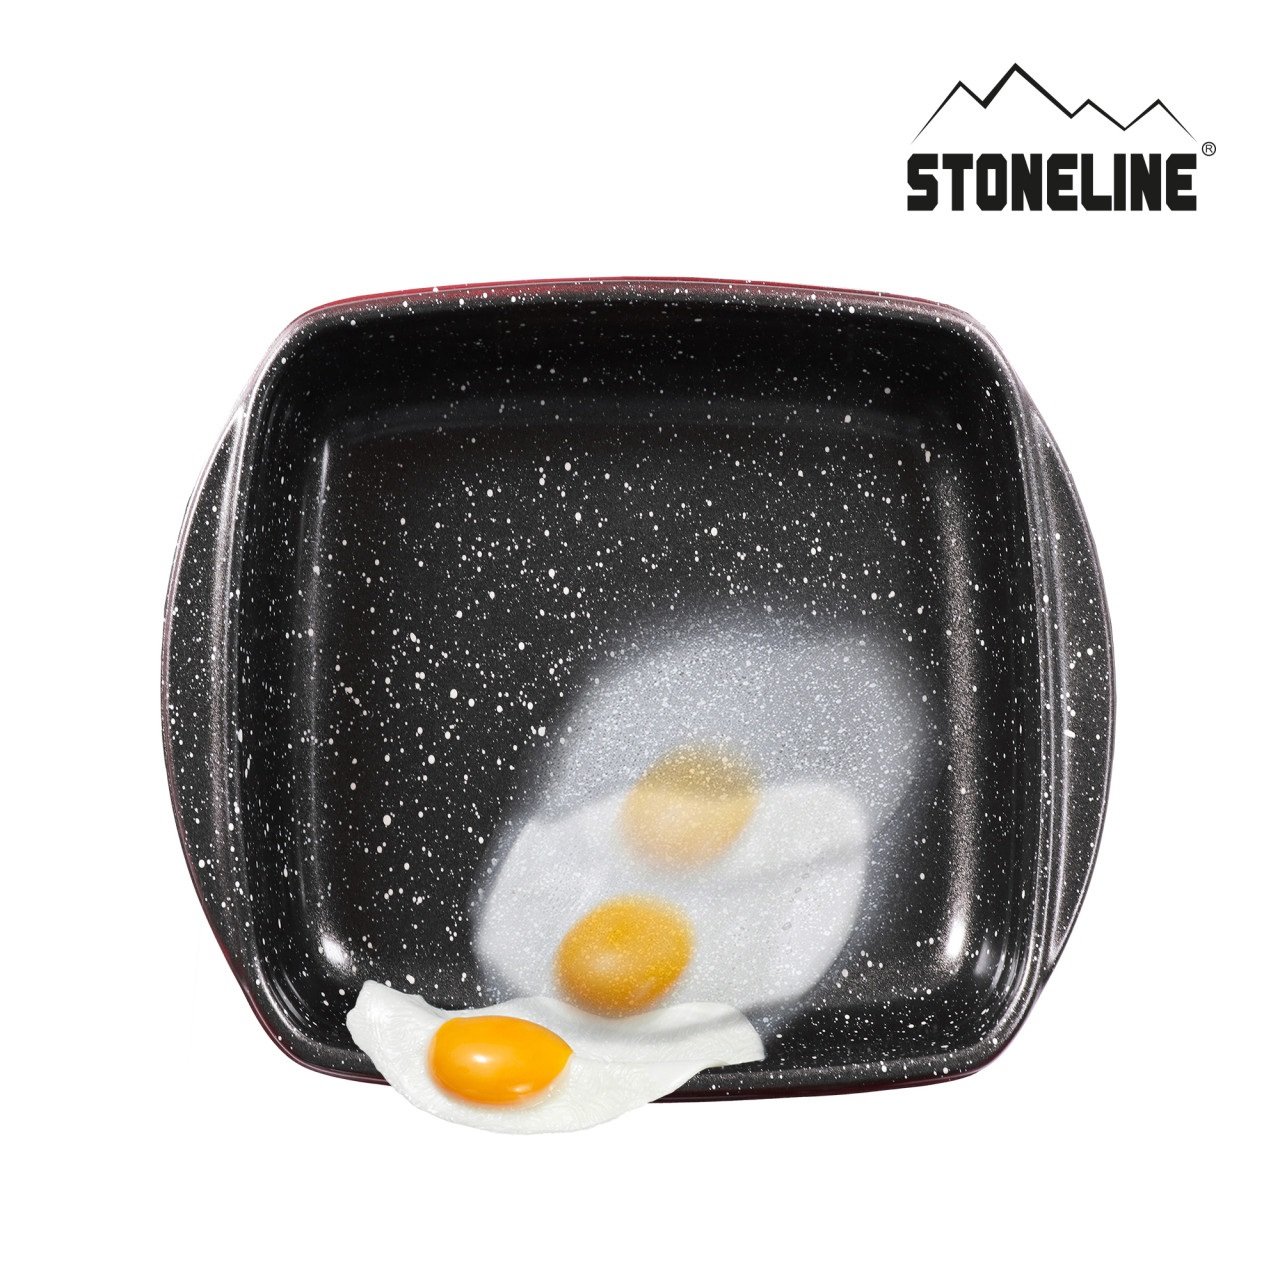 STONELINE® Rectangular Baking Dish 20x17 cm | Non-Stick Borosilicate Glass Oven Dish